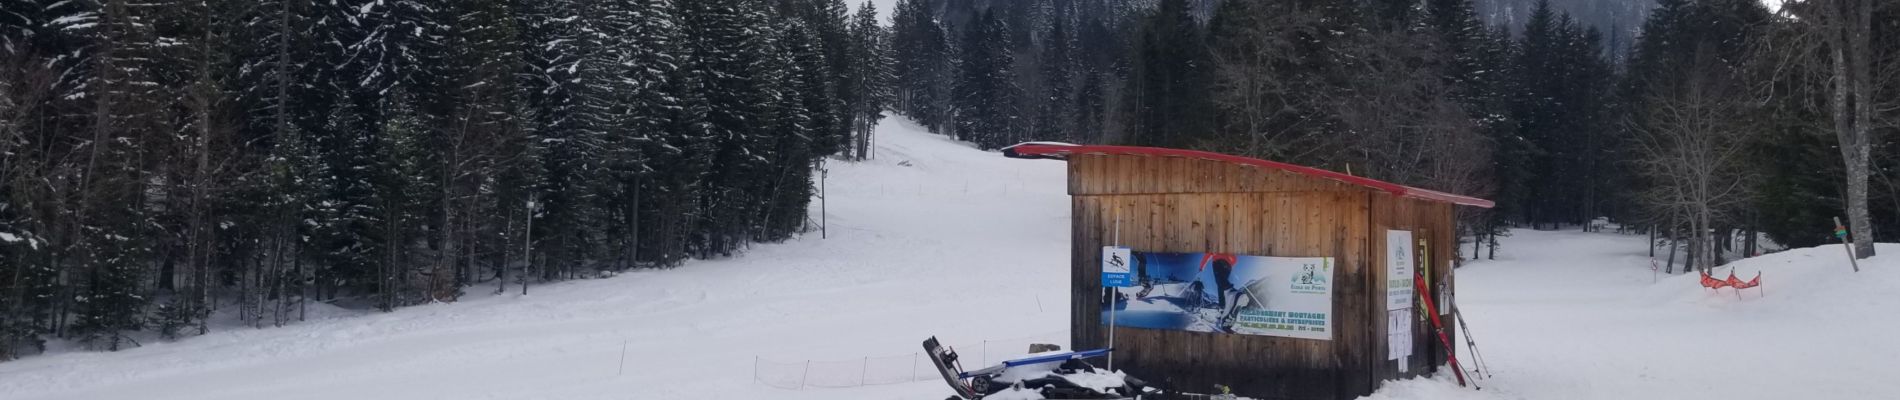 Excursión Esquí de fondo Sarcenas - Ski de fond - col de porte - Photo